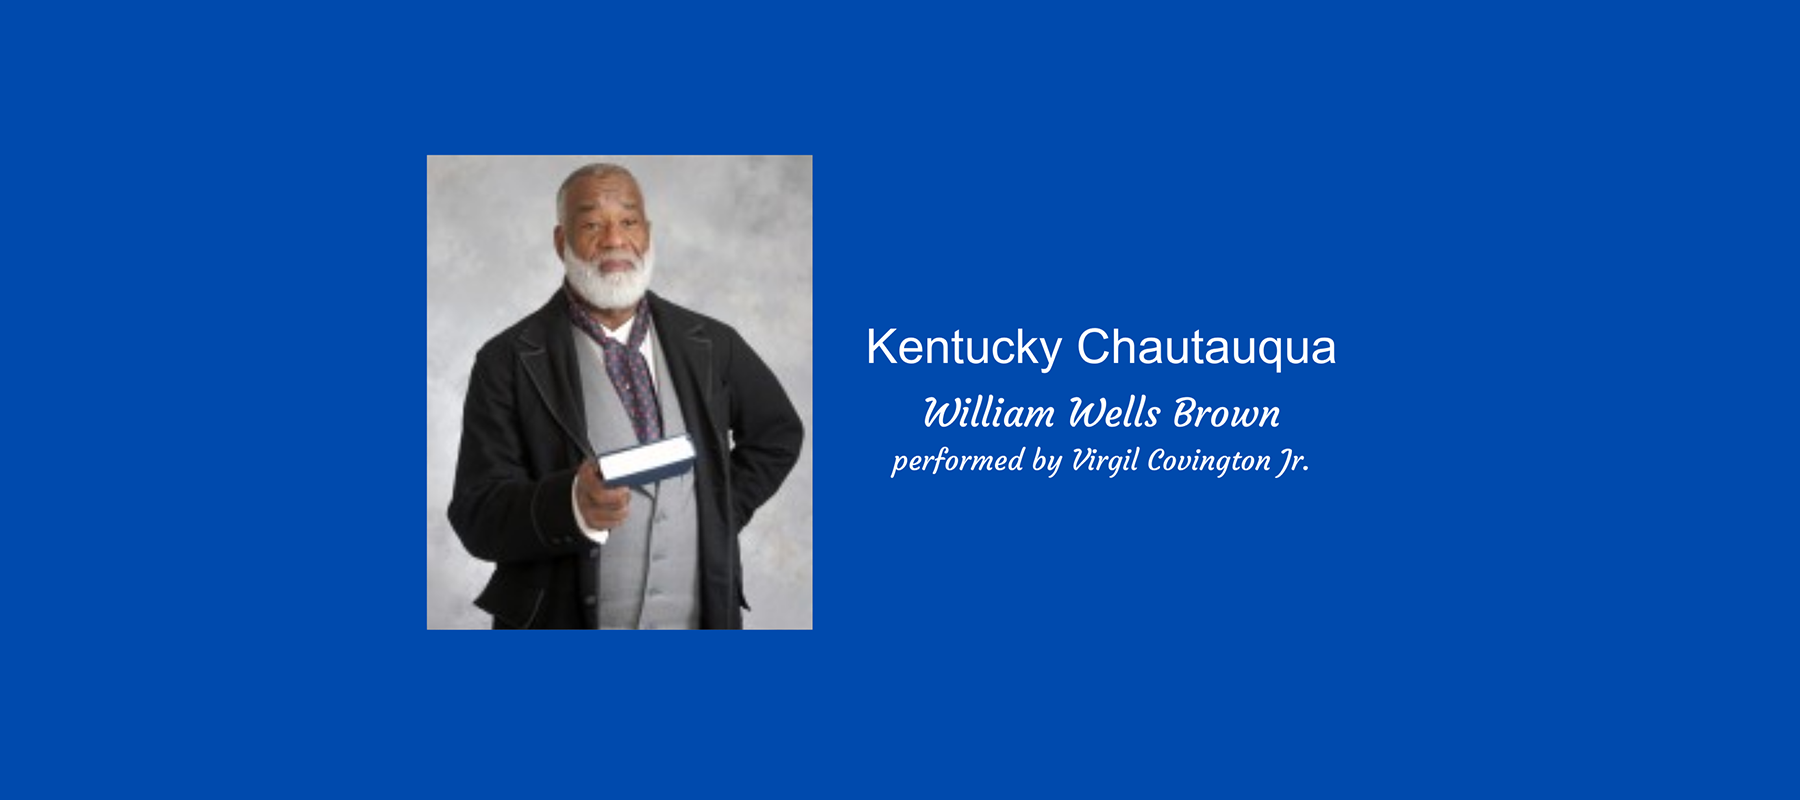 Kentucky Chautauqua William Wells Brown performed by Virgil Covington Jr.